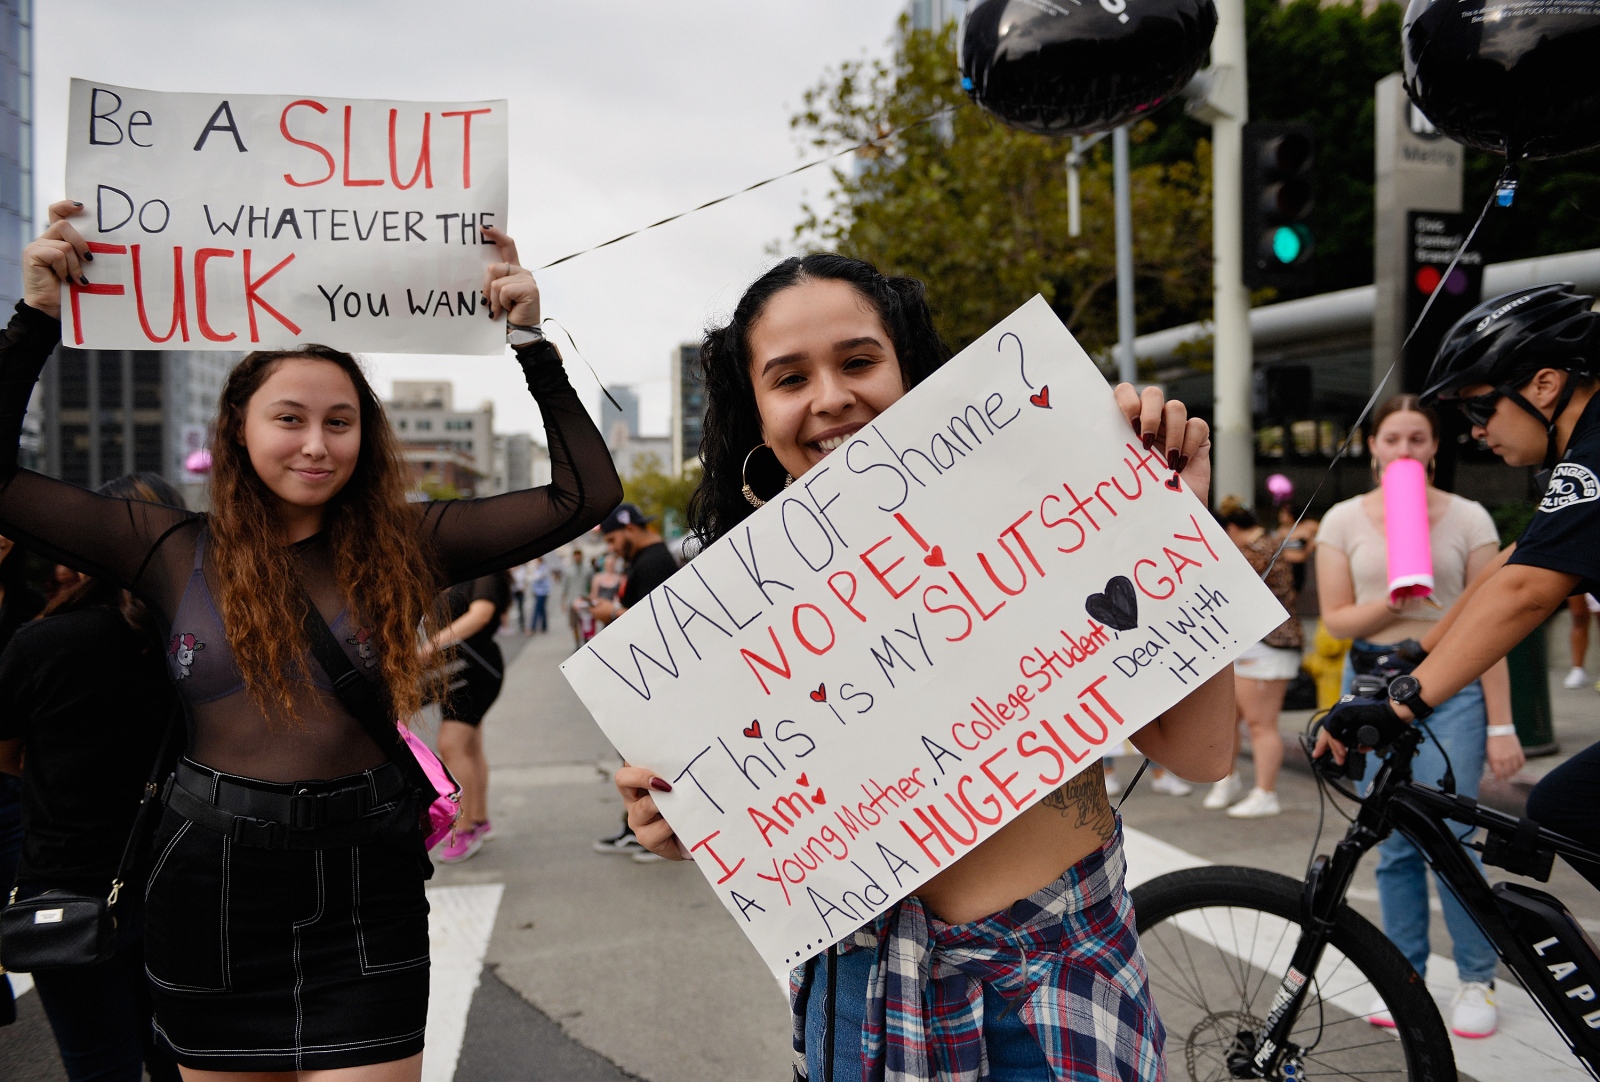 Image from The Amber Rose SlutWalk